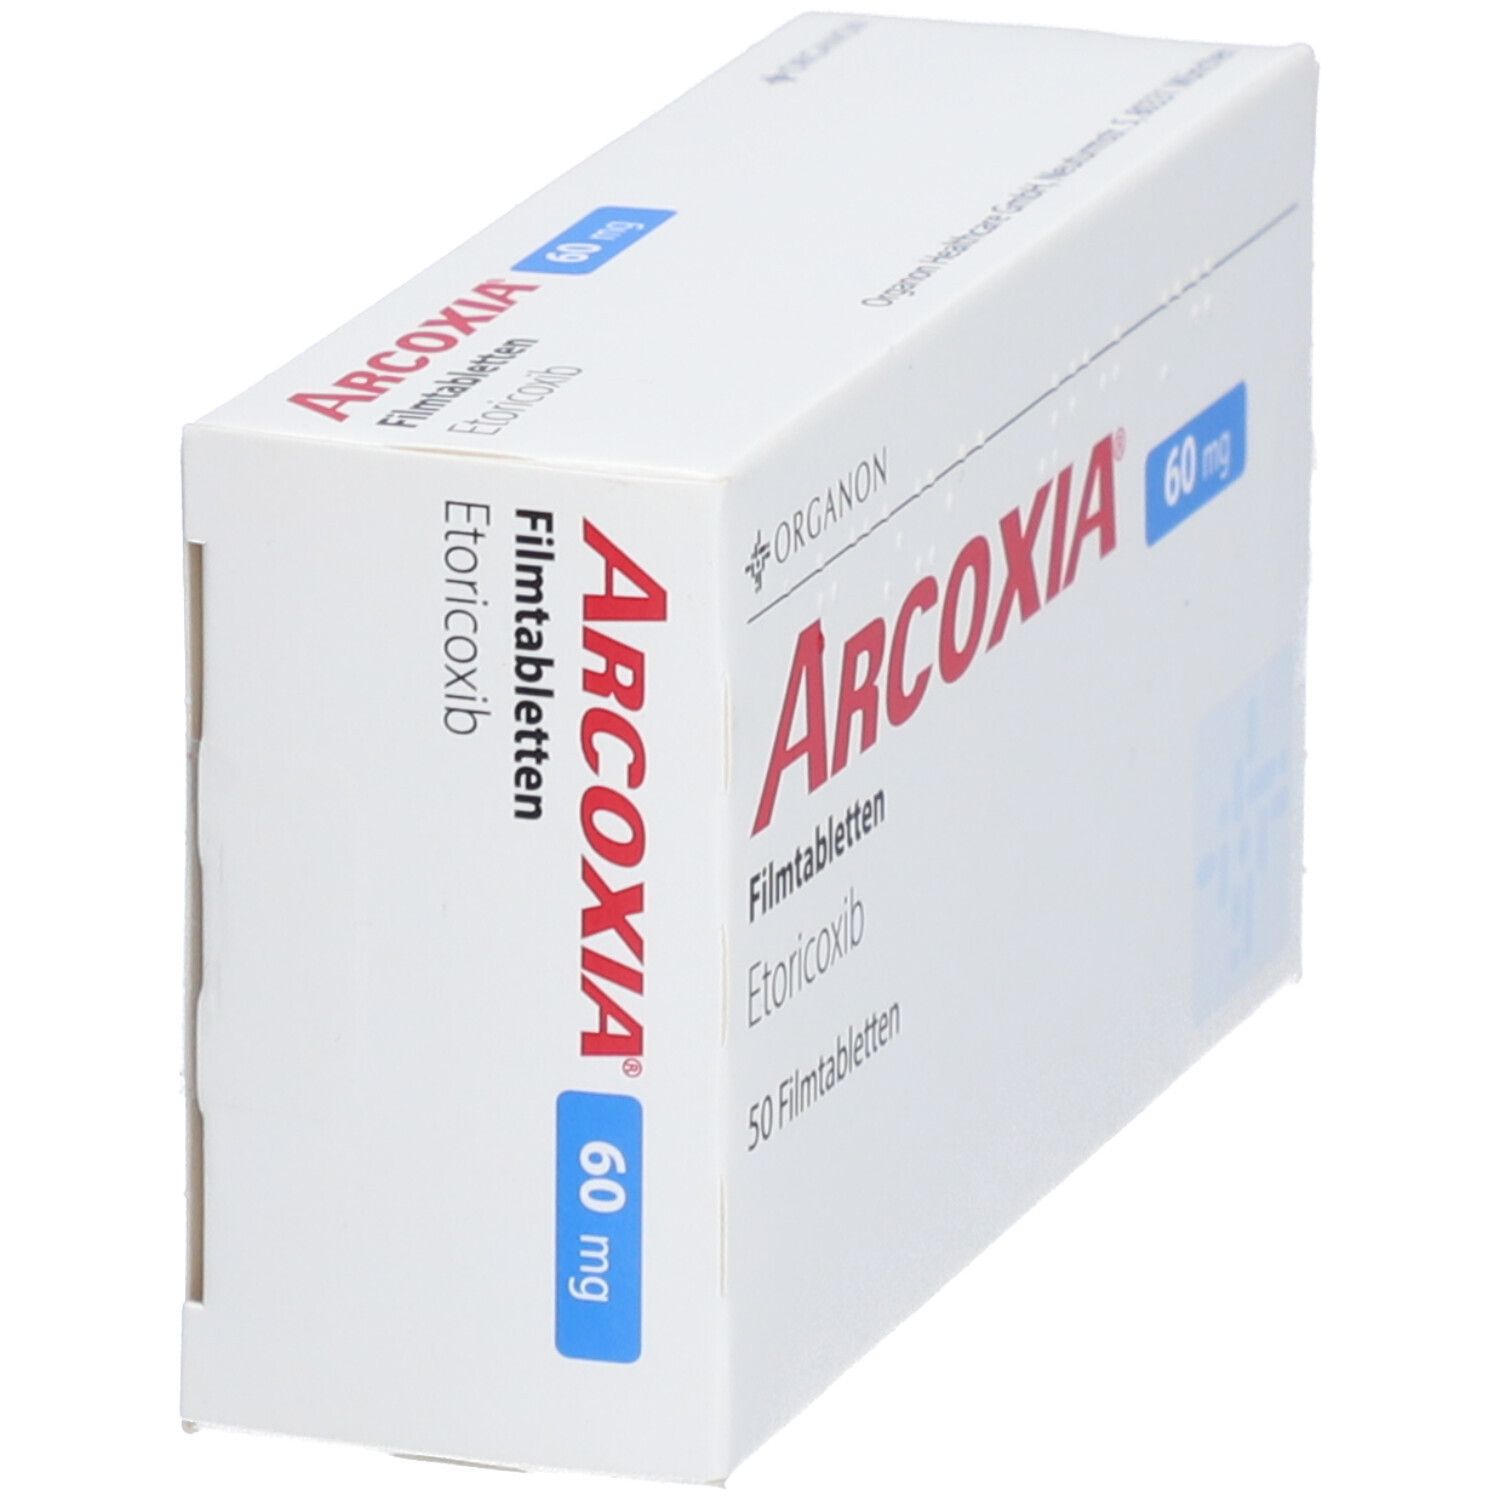 ARCOXIA® 60 mg